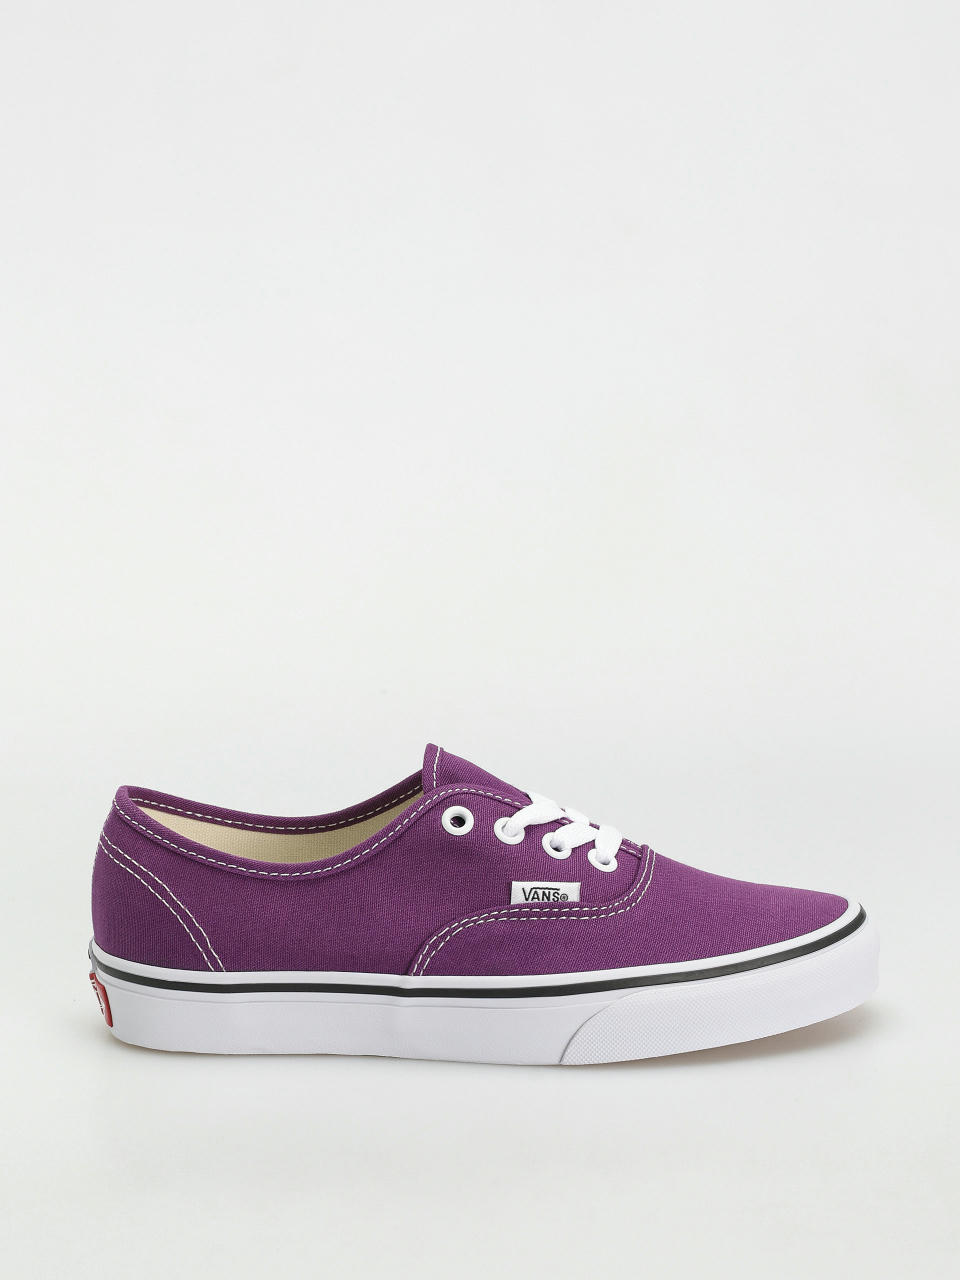 Vans Authentic Schuhe (color theory purple magic)